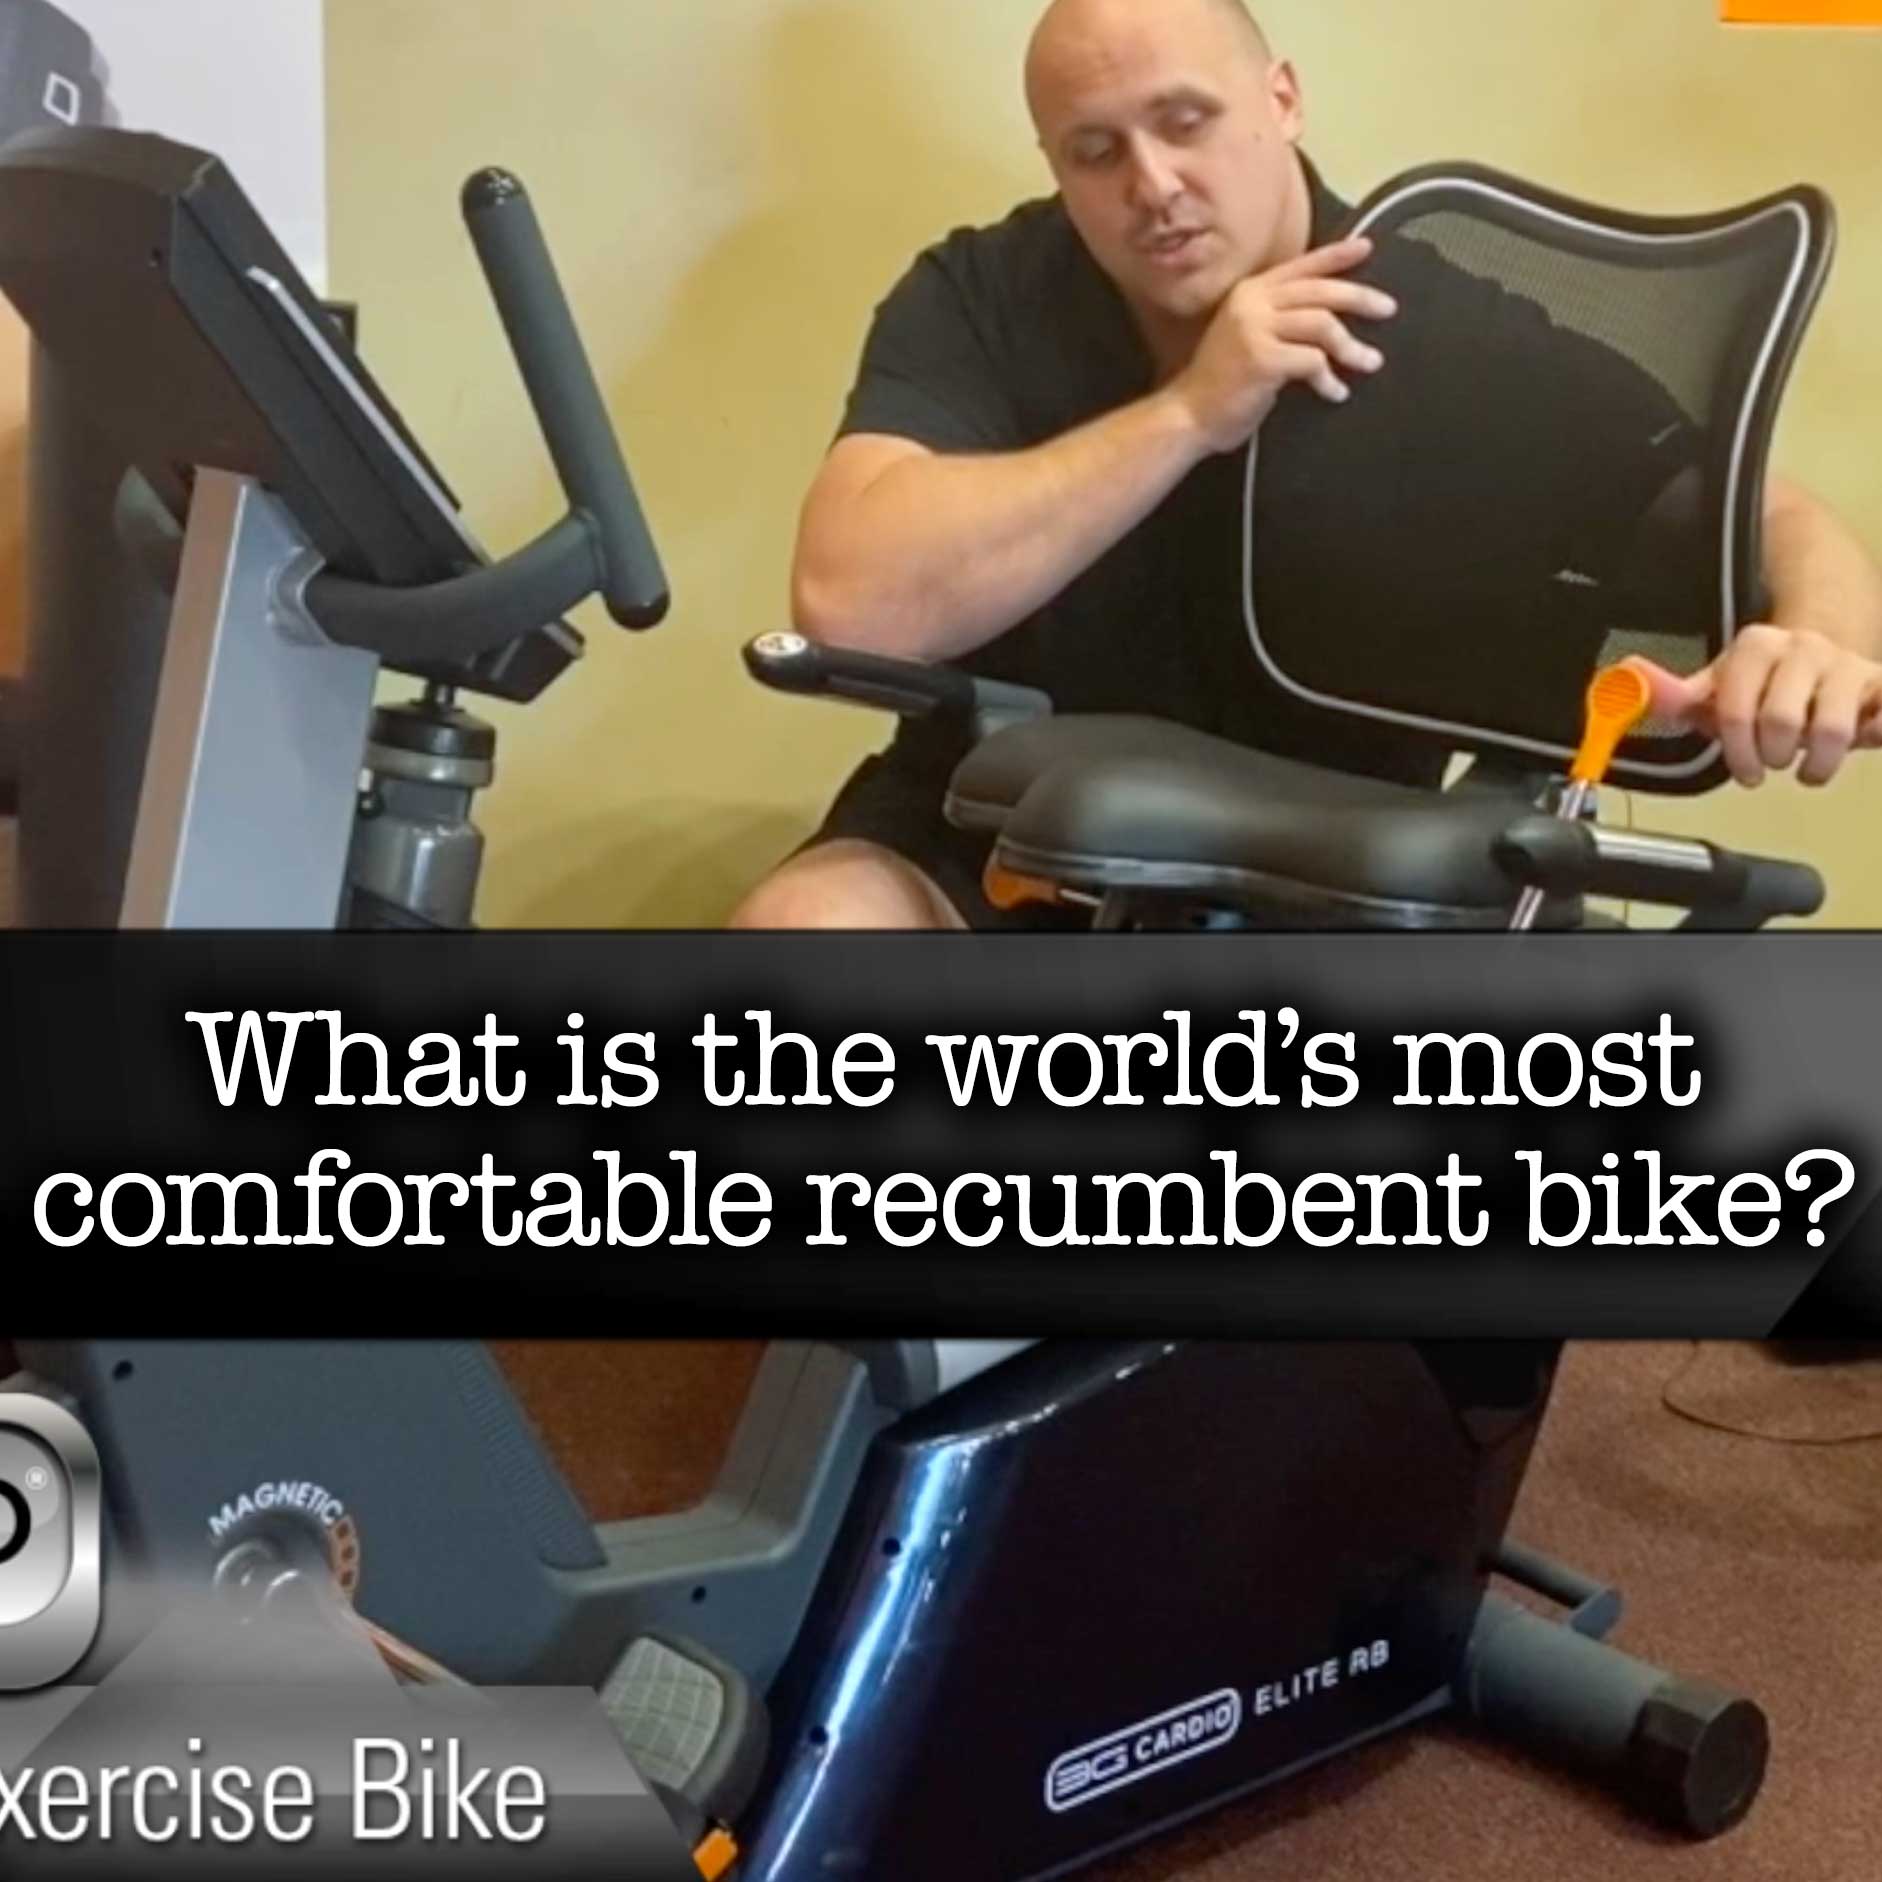 3g cardio elite rb recumbent bike